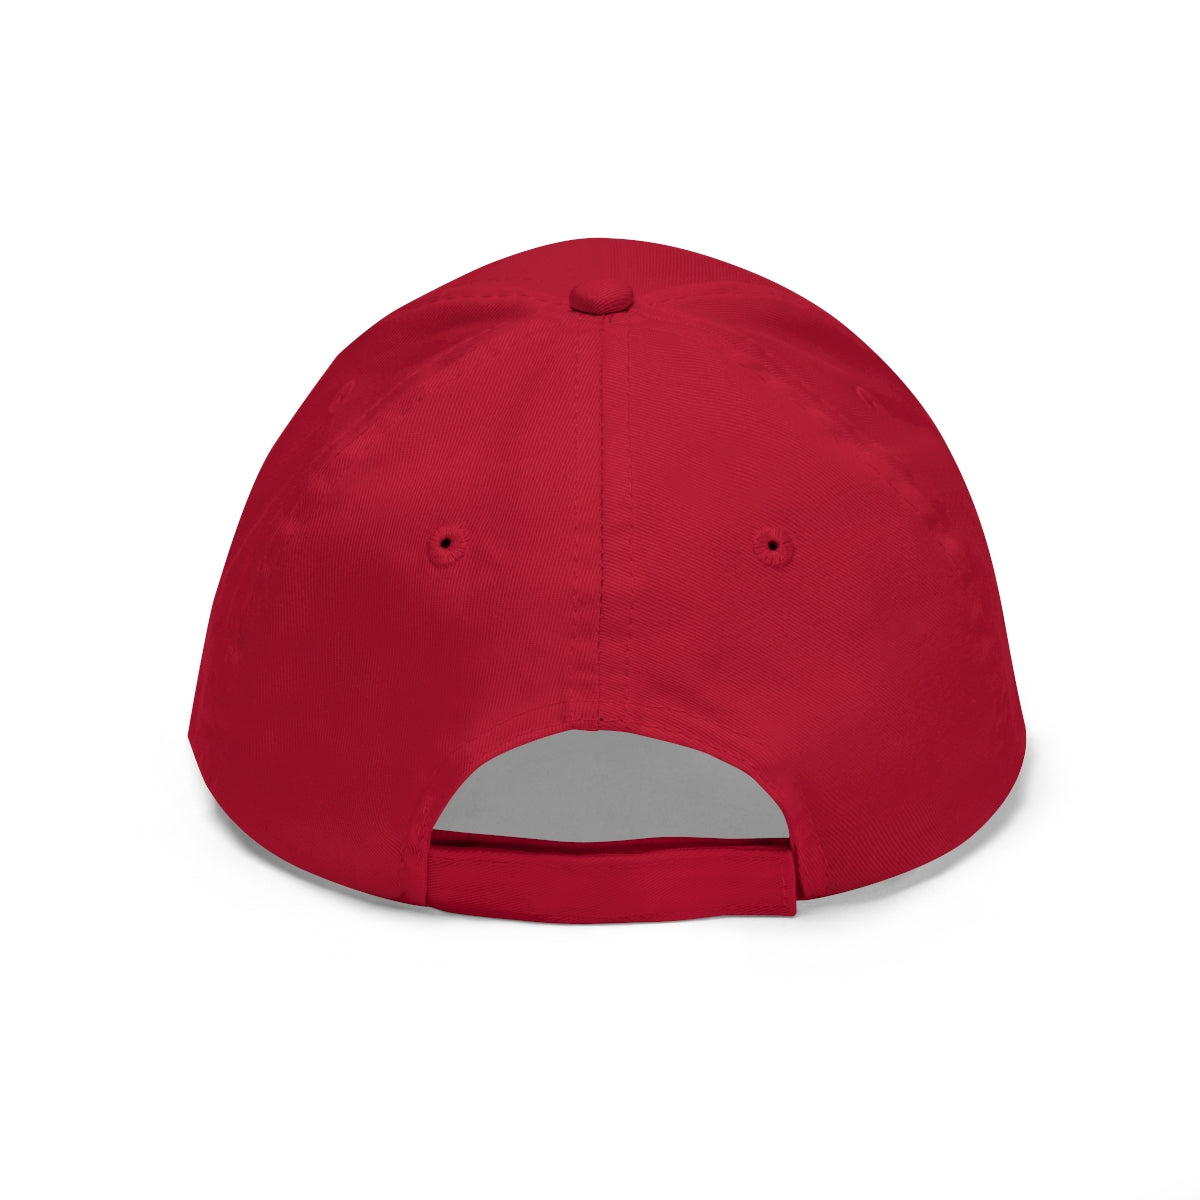 MAGAGA Red Unisex Twill Hat